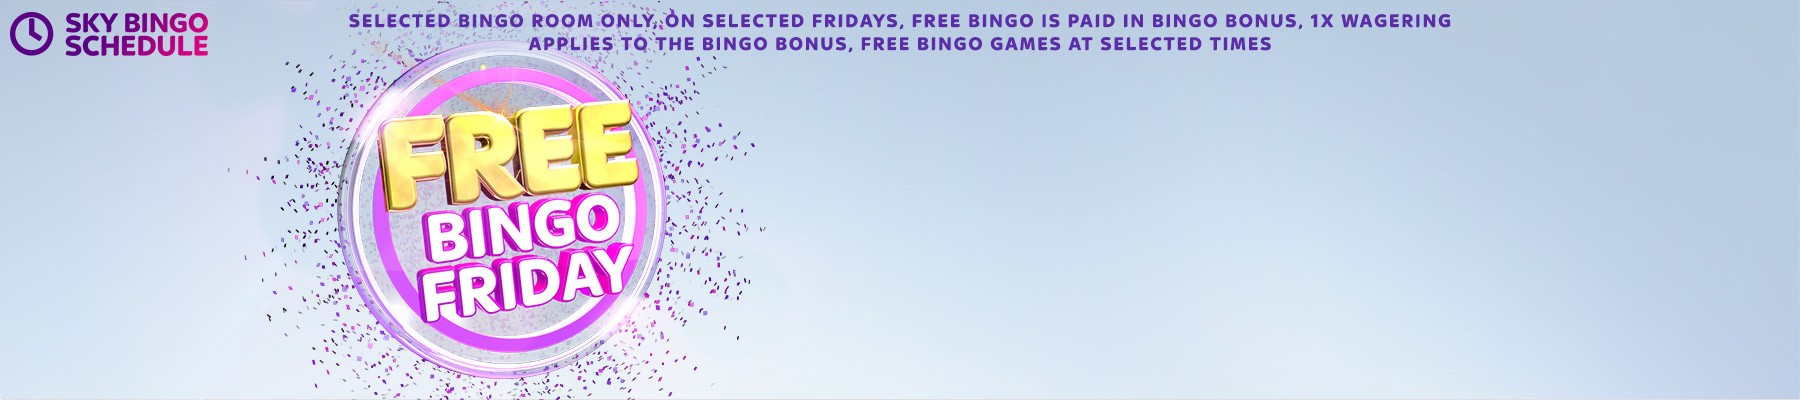 Bingo games free online no downloads